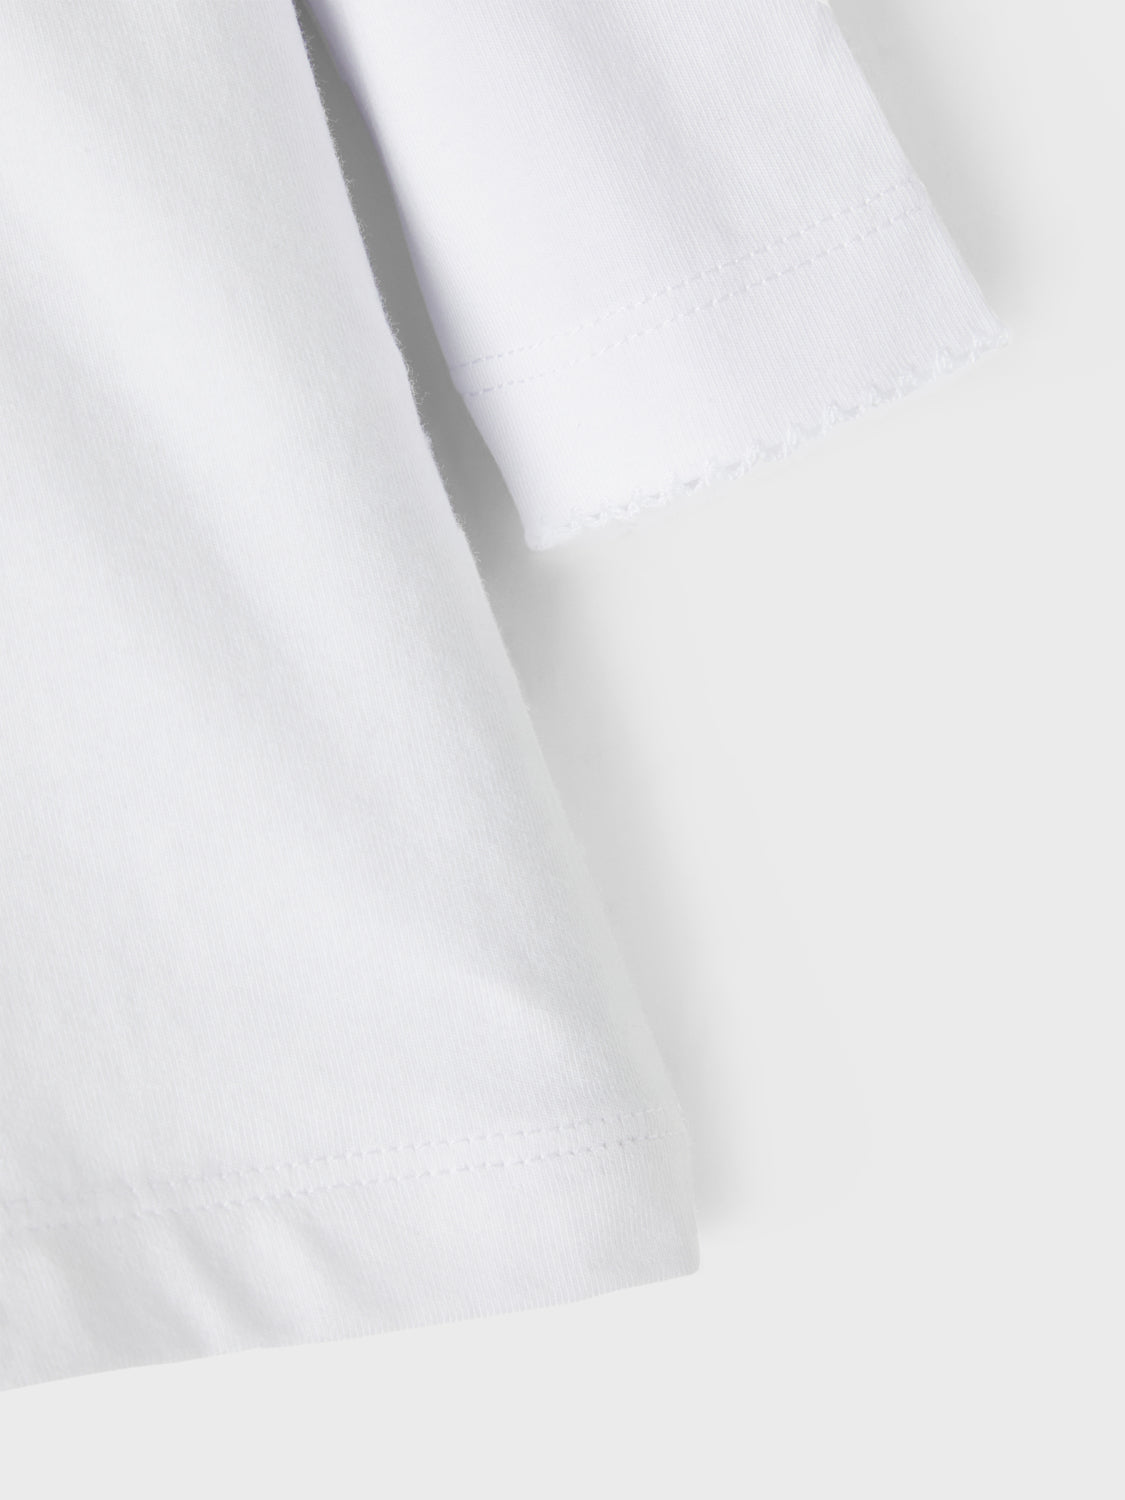 NBFHYRA T-Shirts & Tops - Bright White